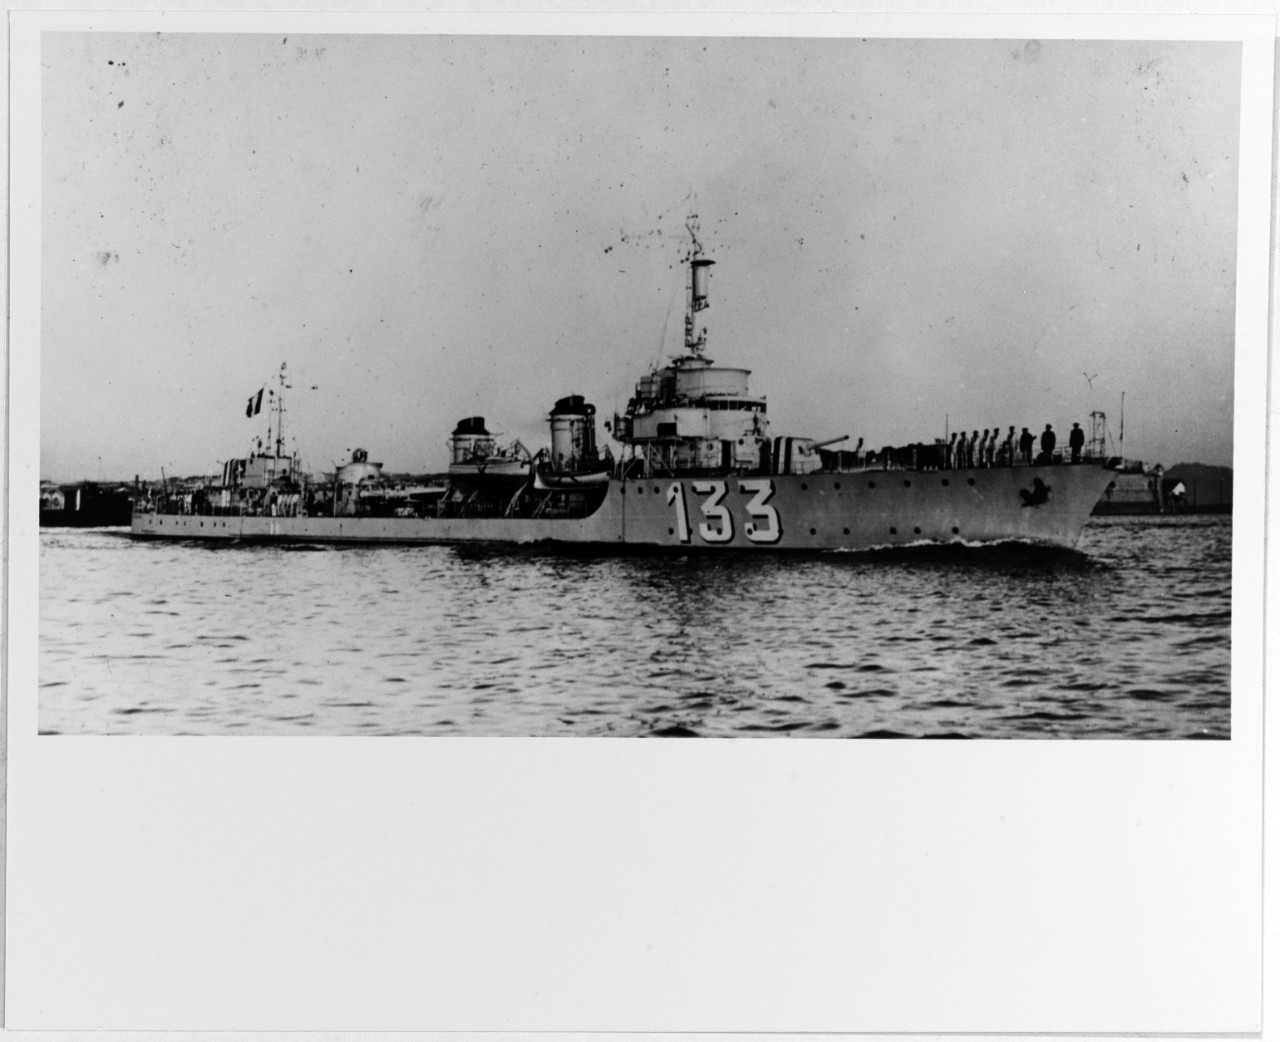 BOMBARDE (French torpedo boat, 1936-1944)